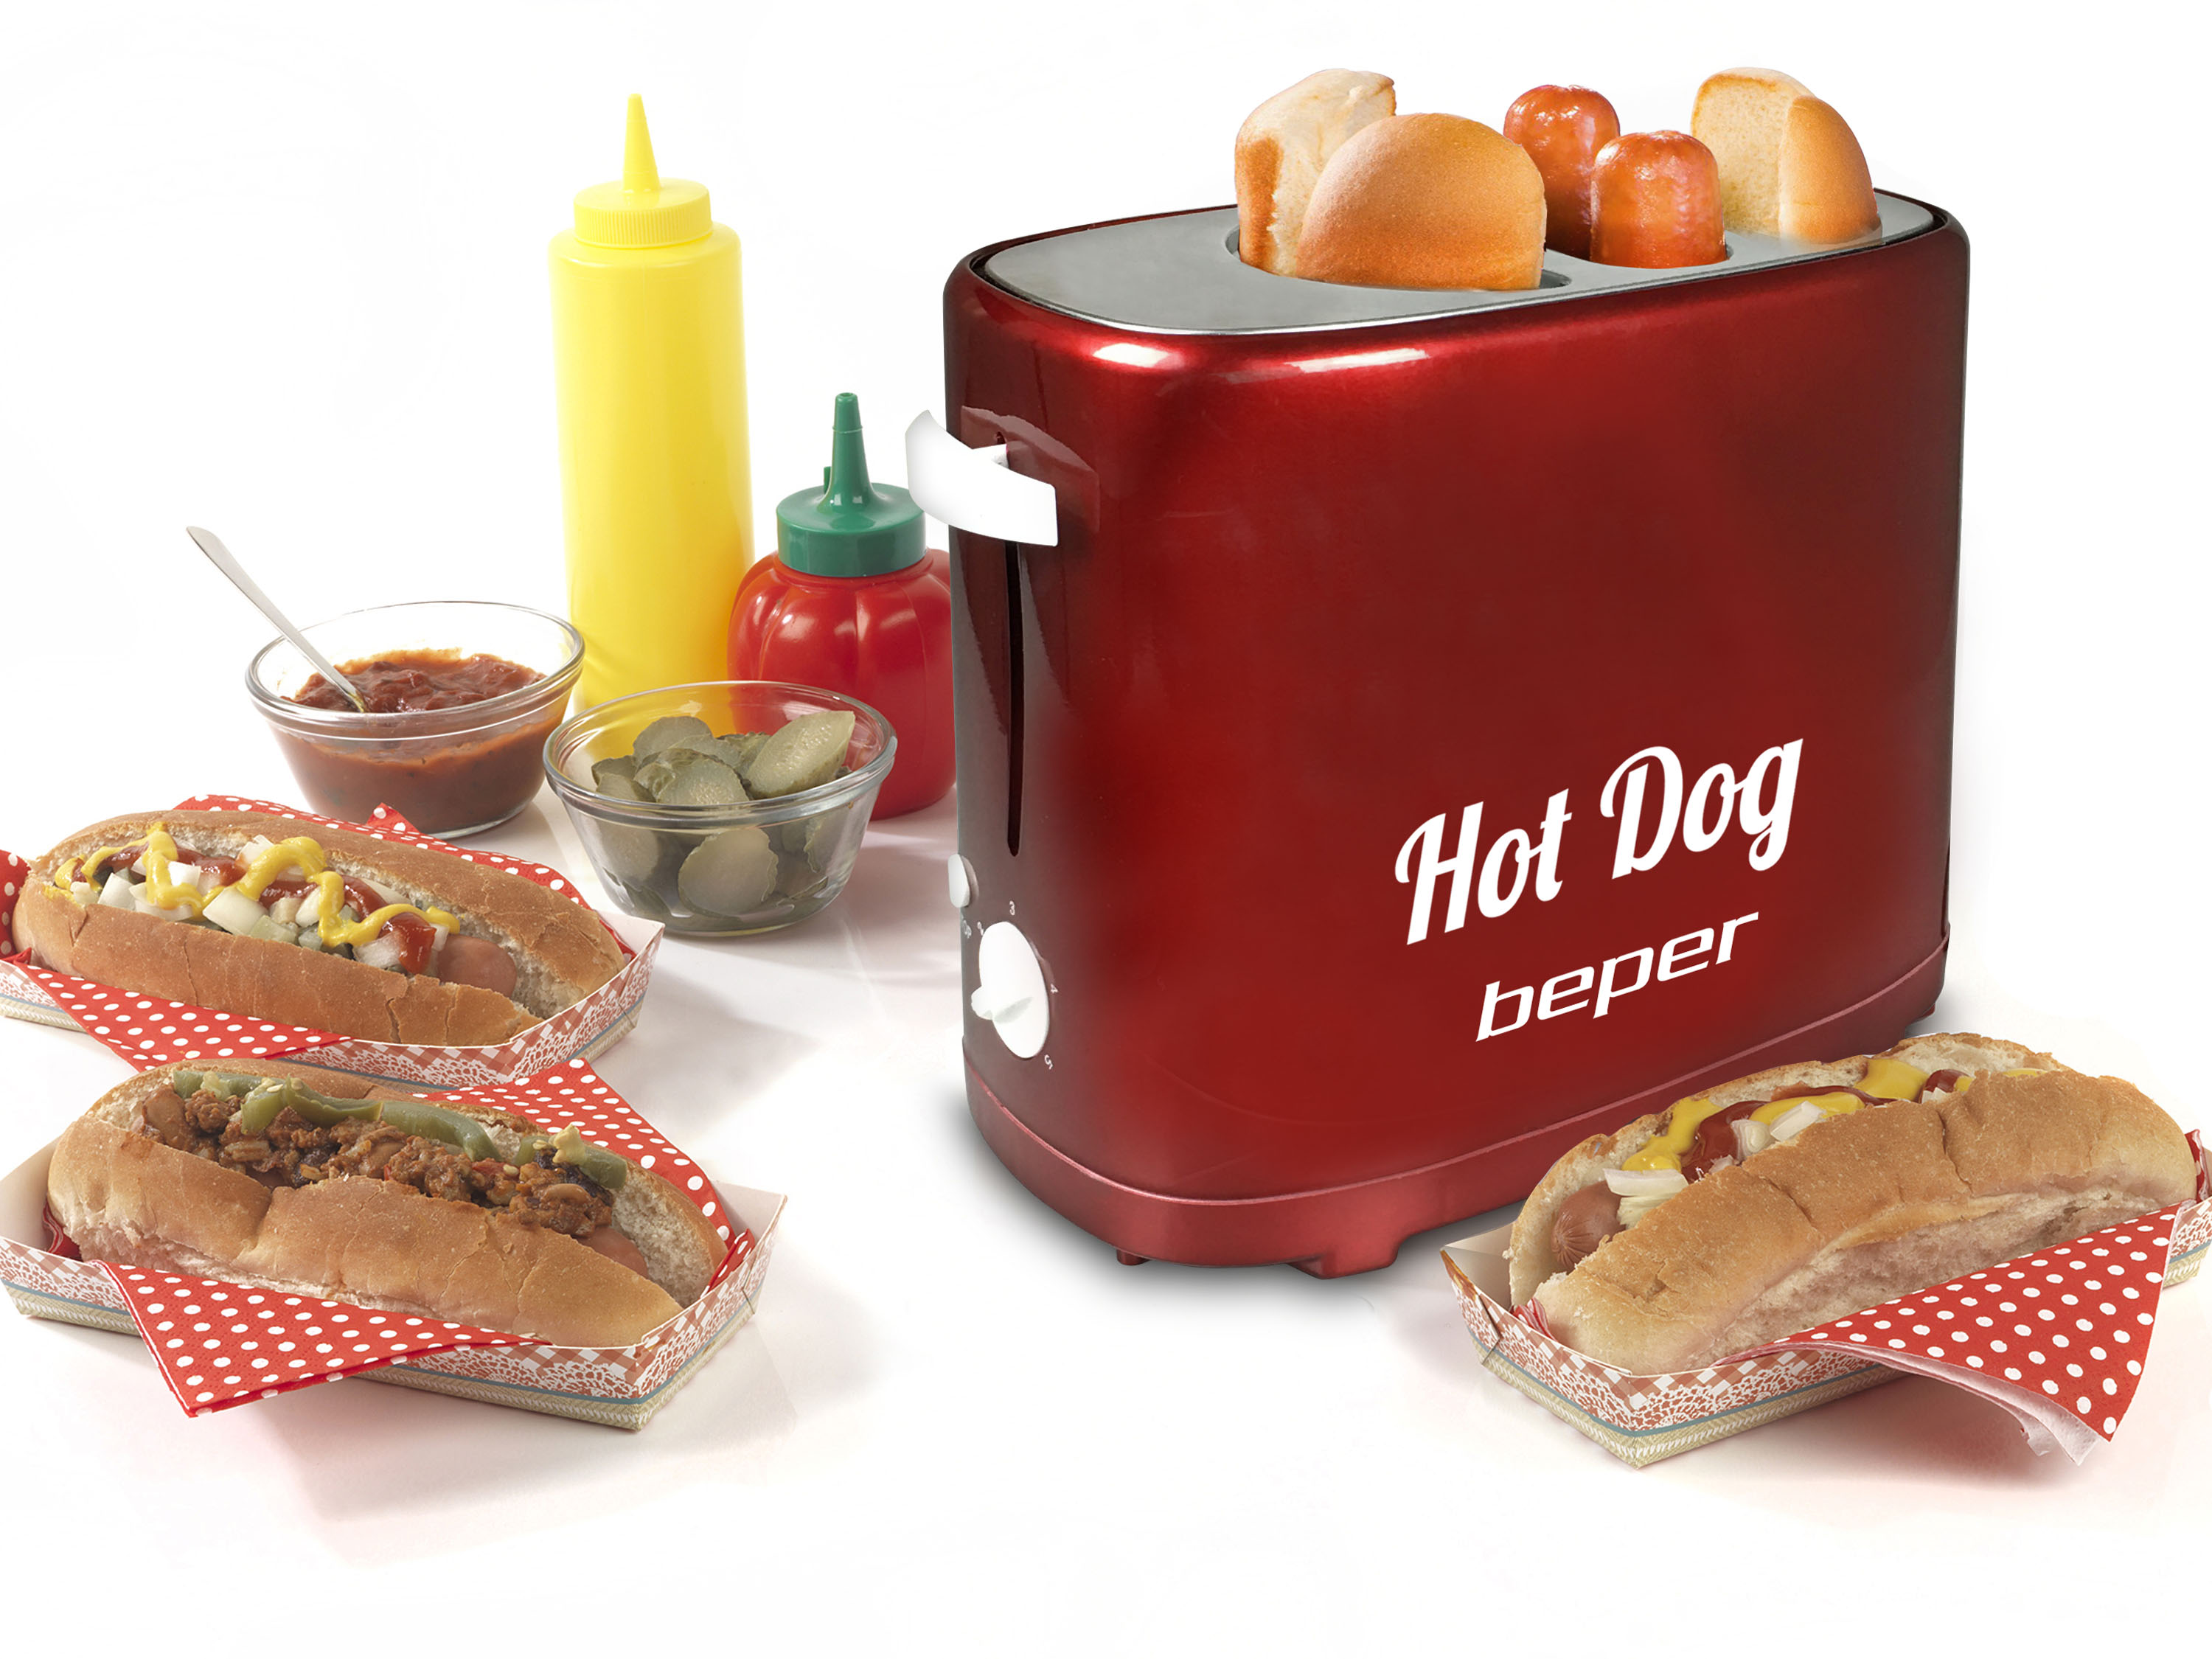 Macchina per Hot dog